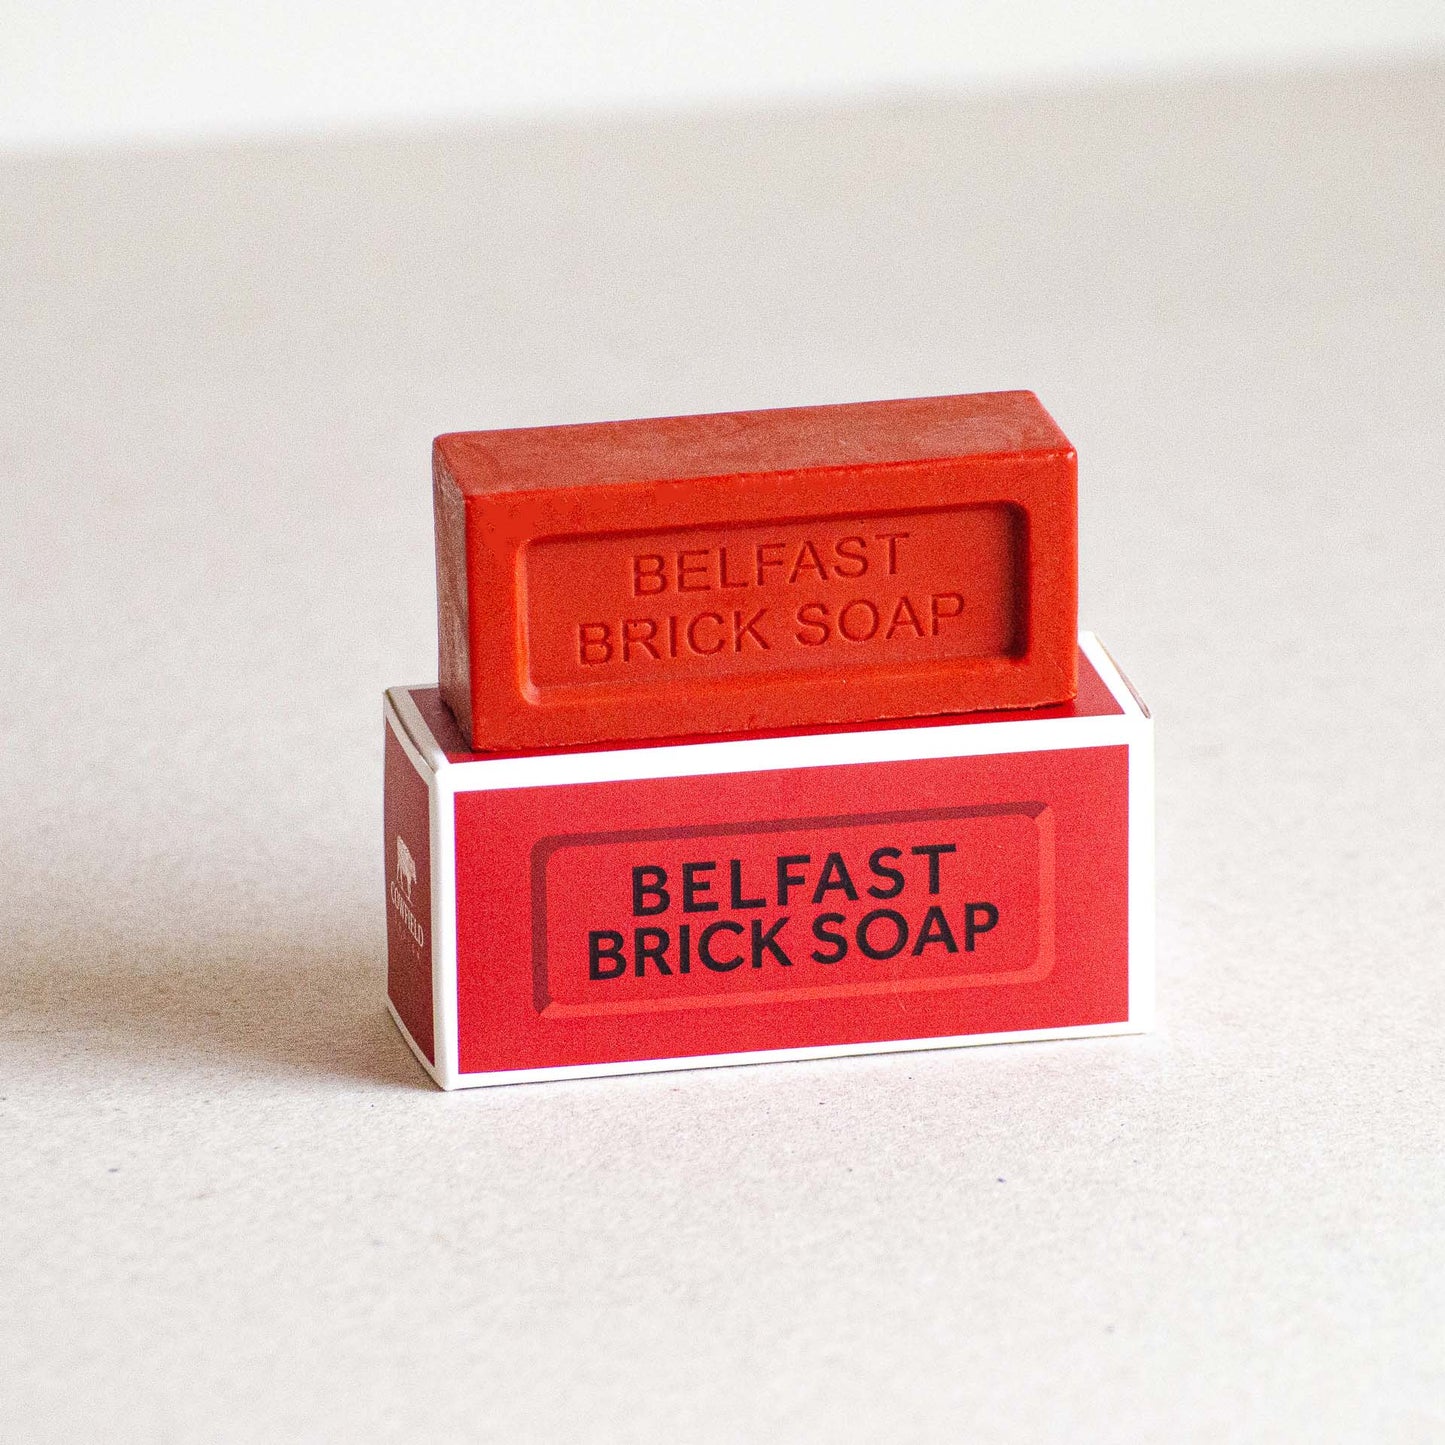 Belfast Brick Soap